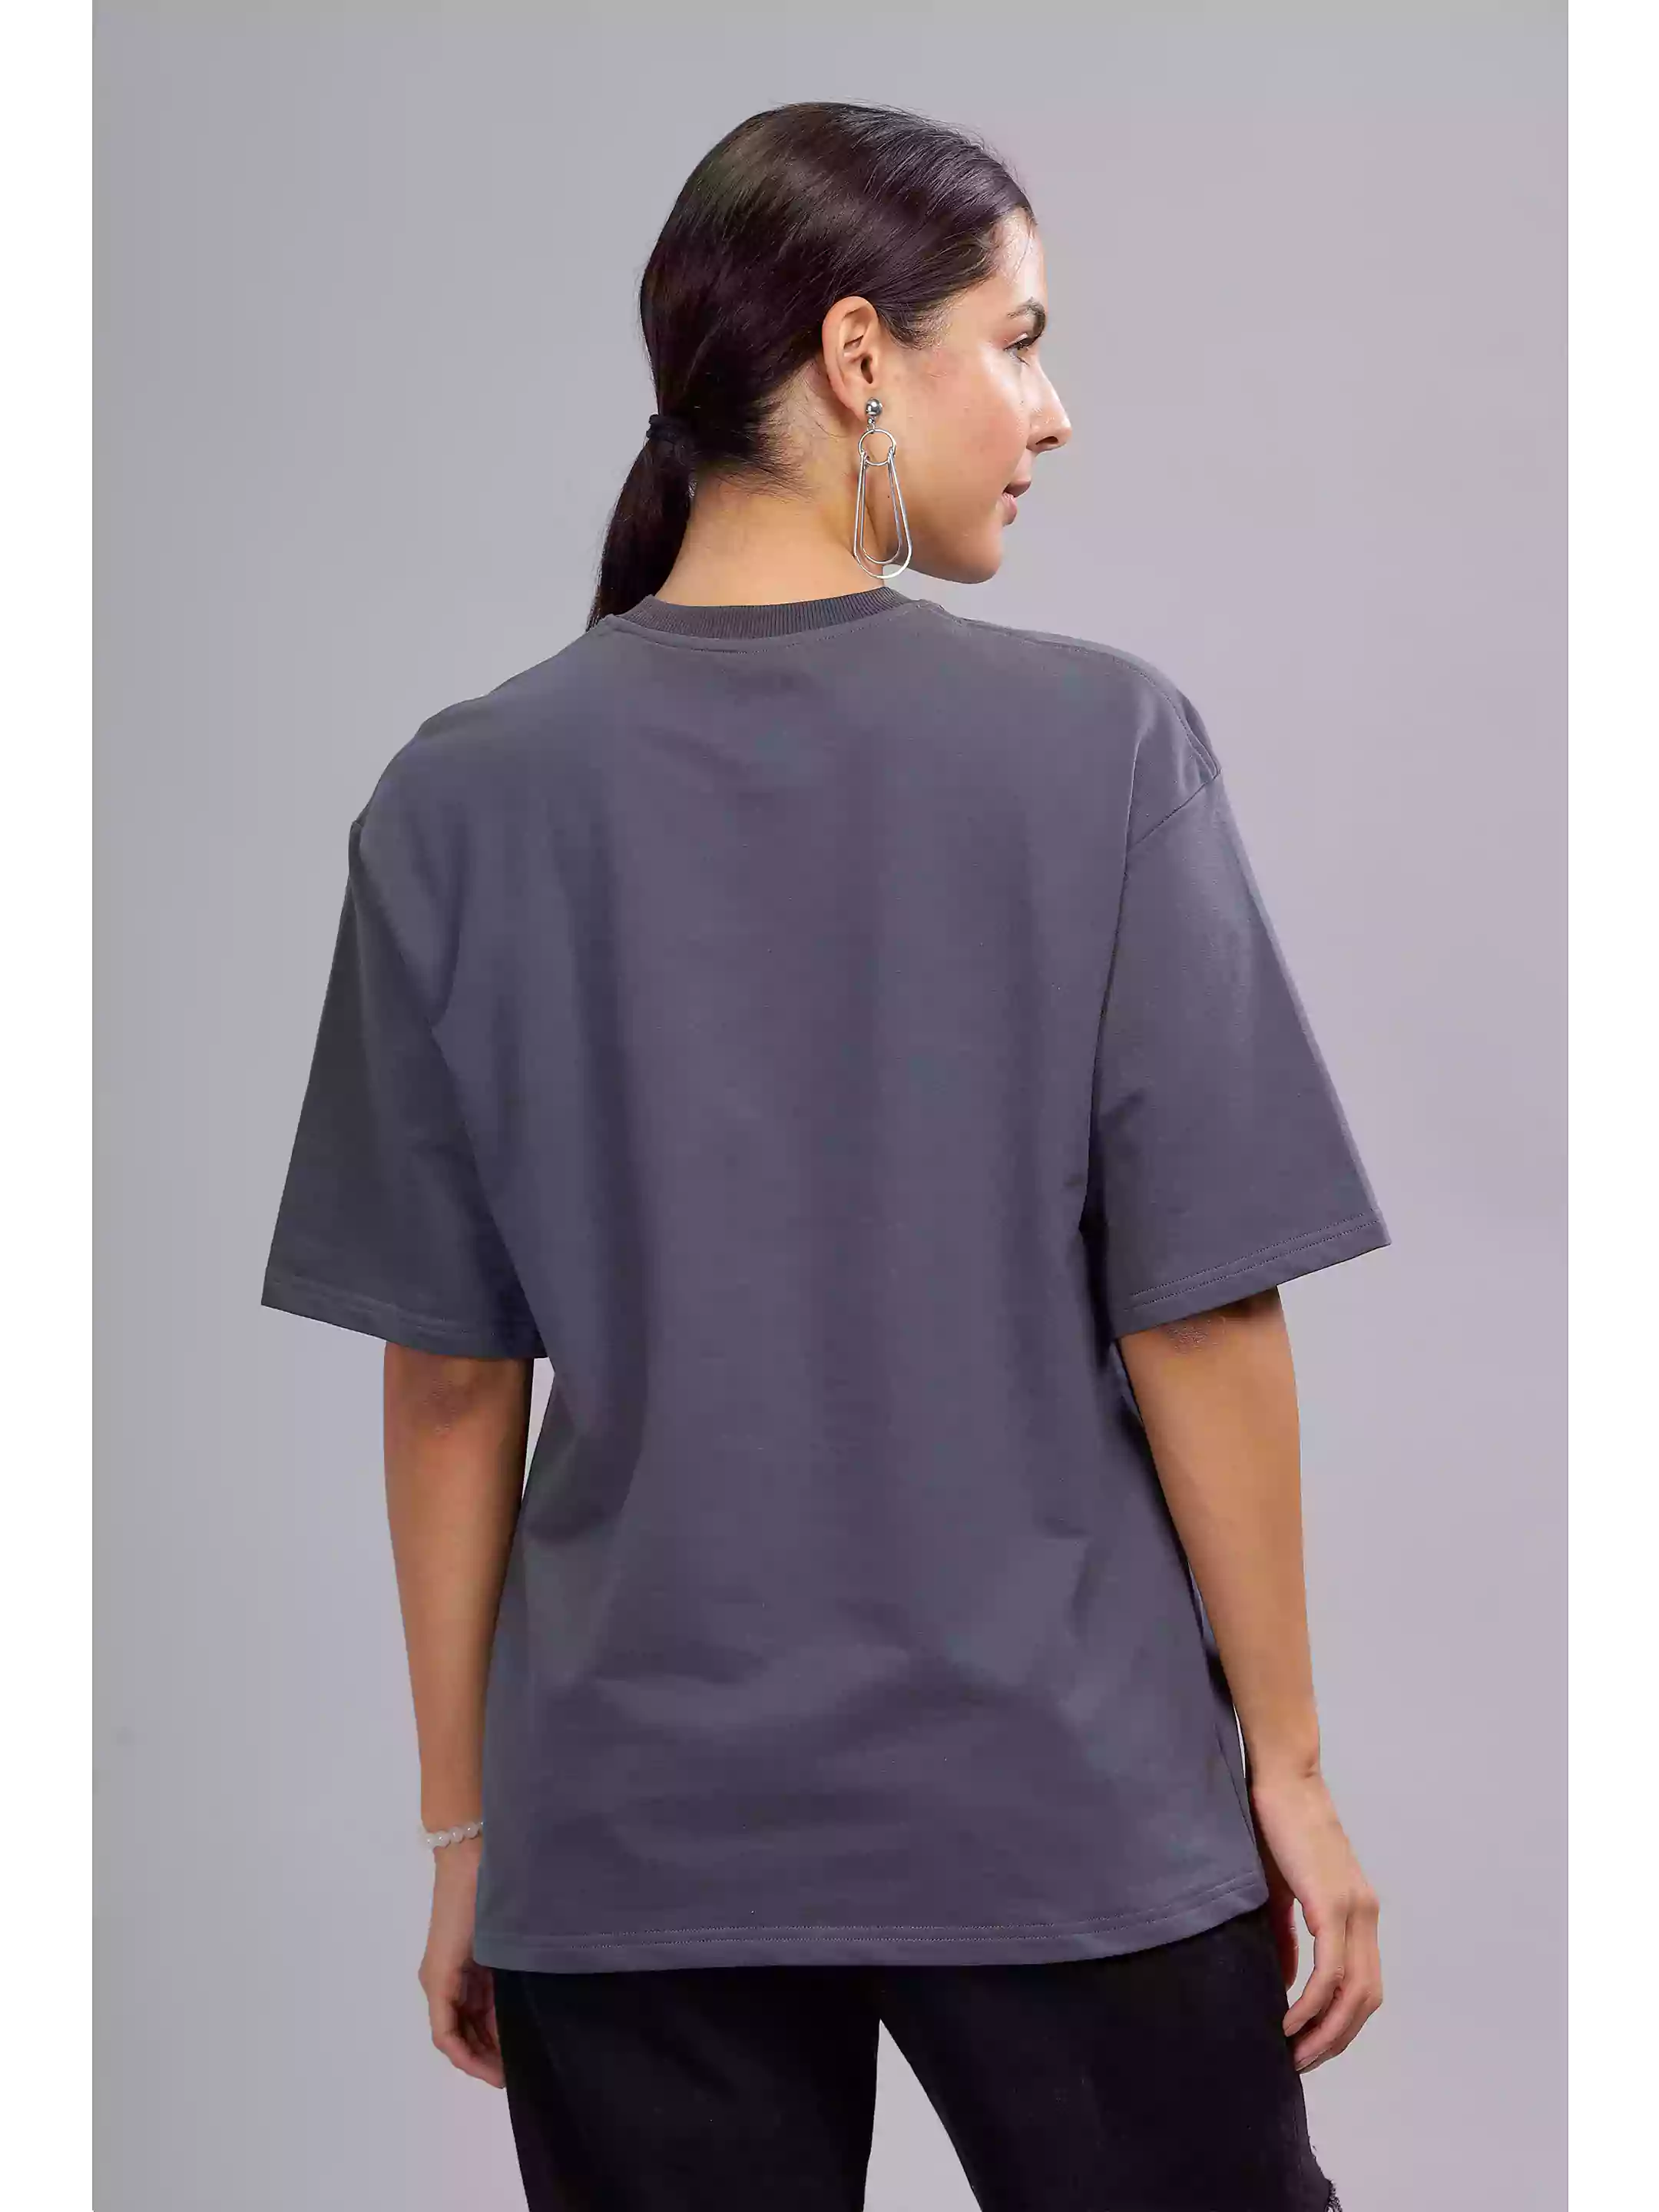 Solid Steel Grey Over sized - Sukhiaatma Unisex T-shirt